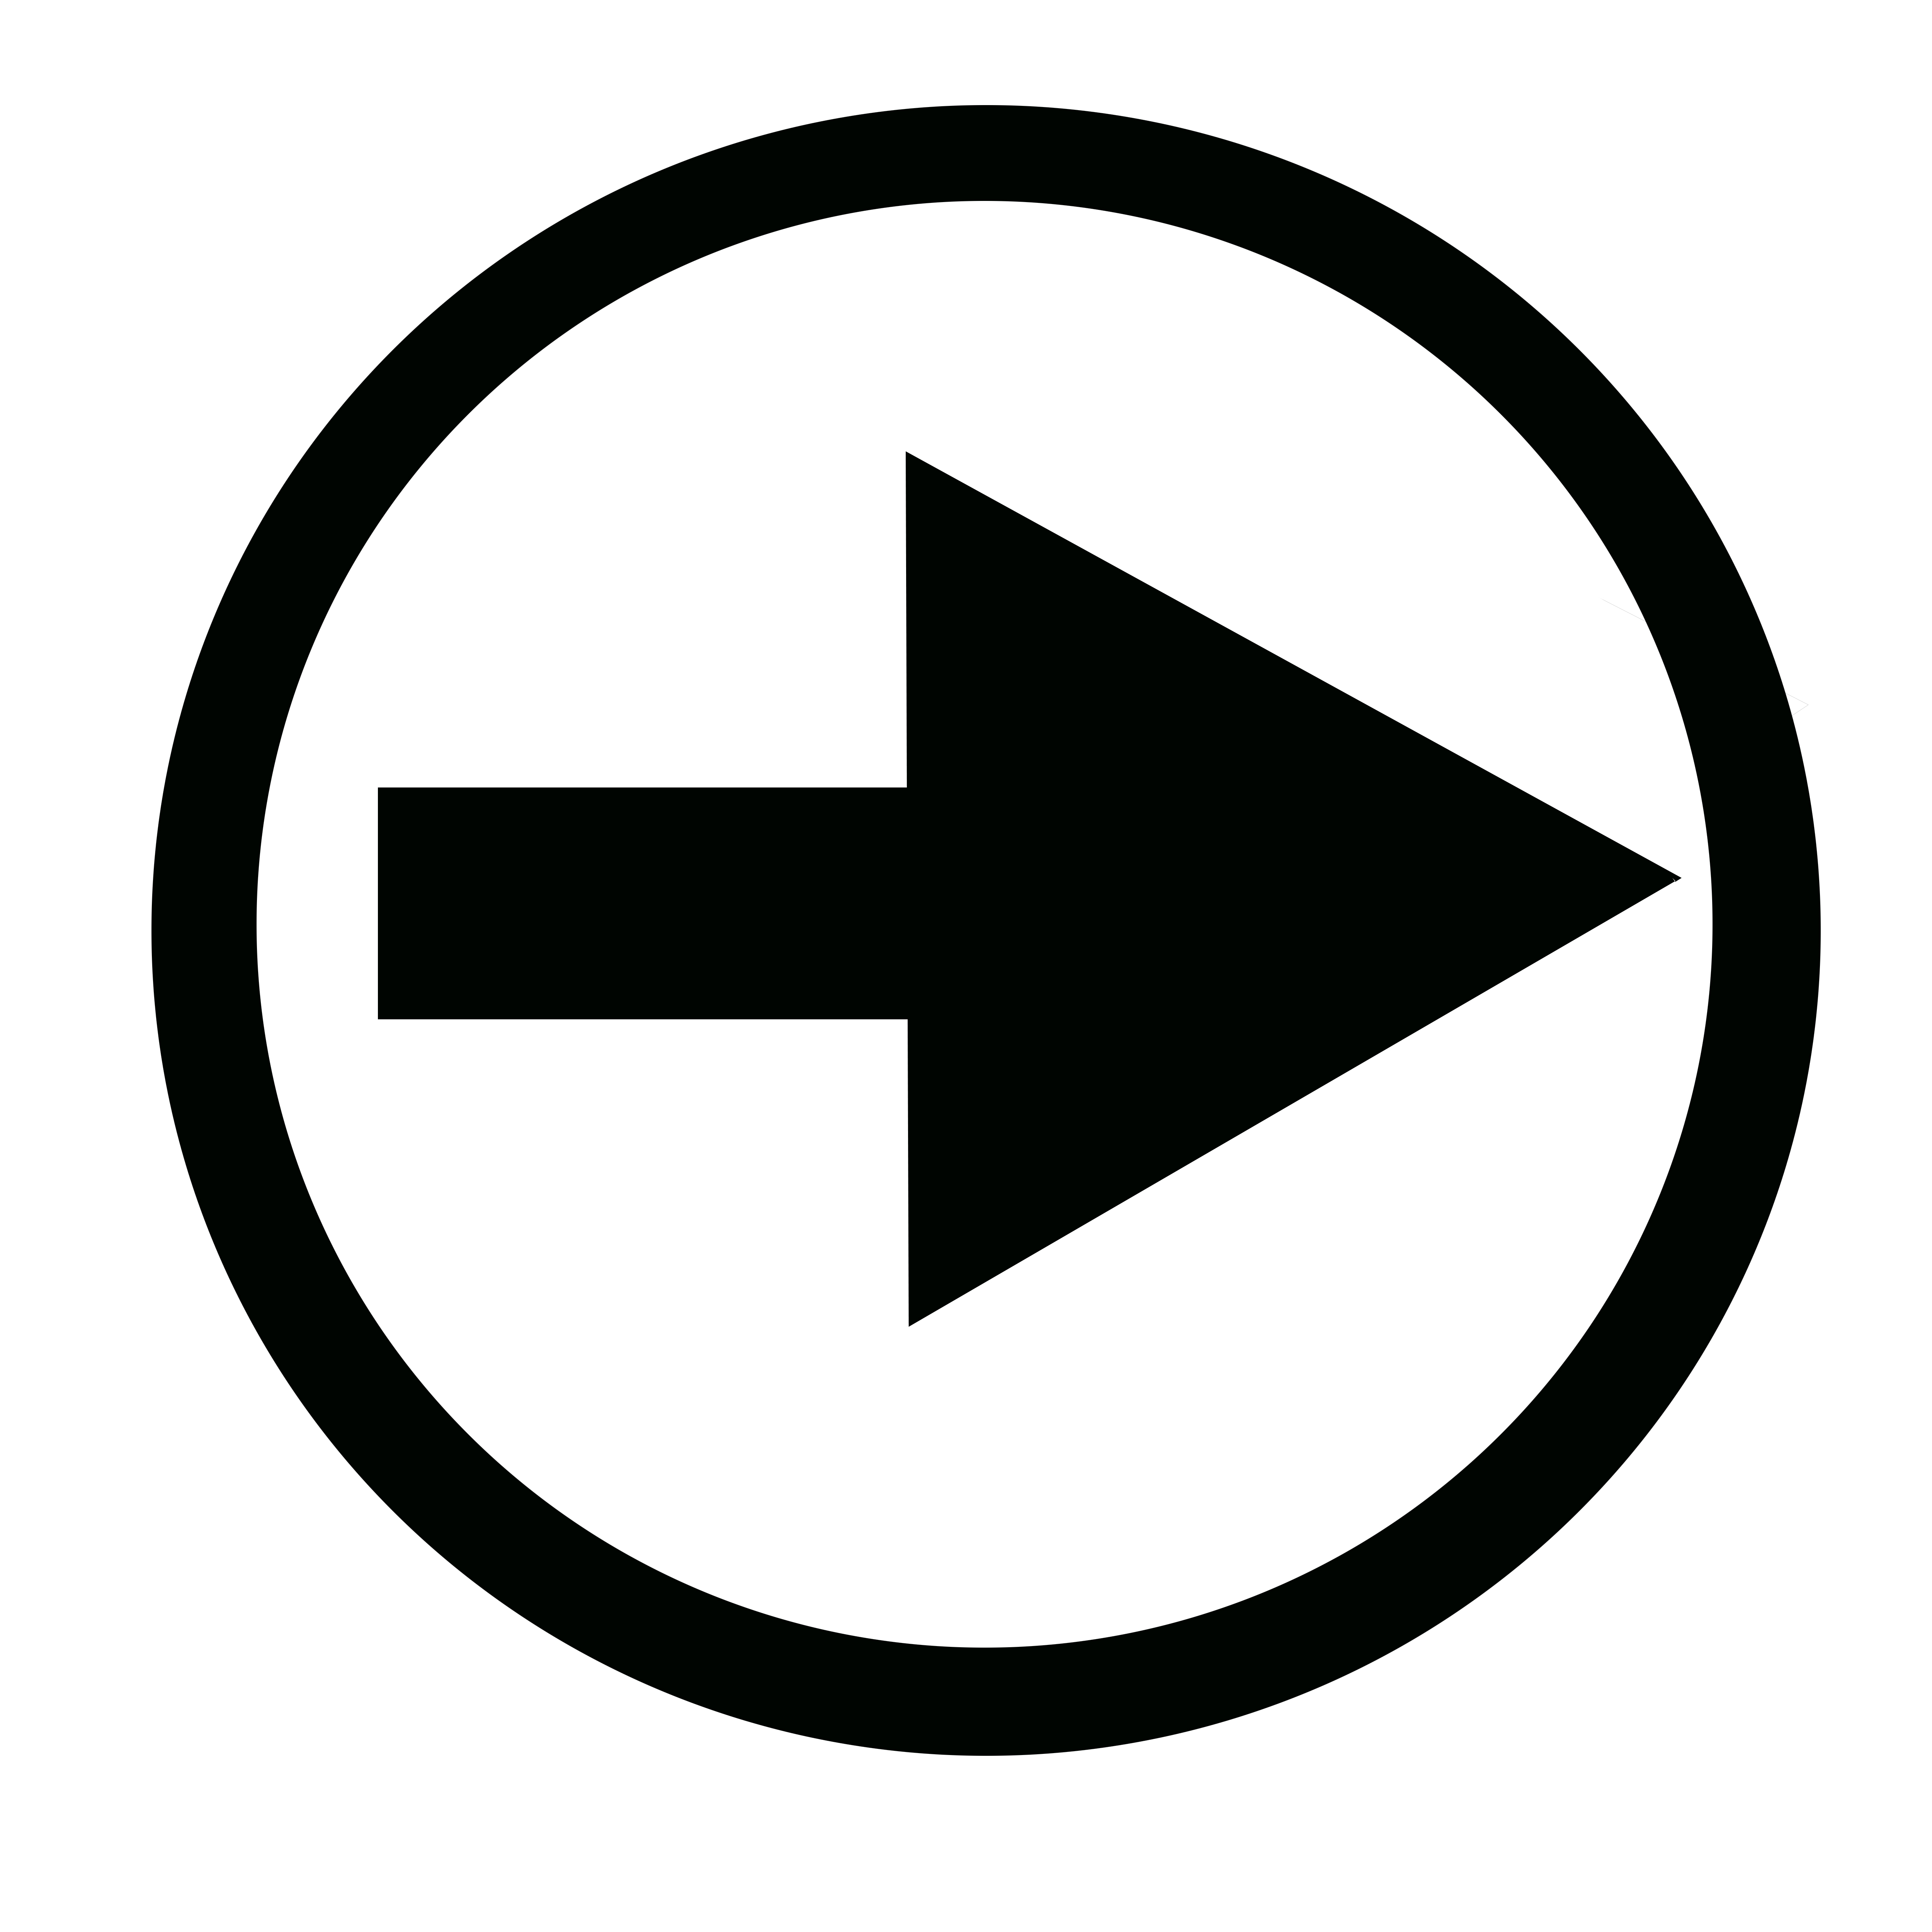 File:Right-facing-Arrow-icon.jpg